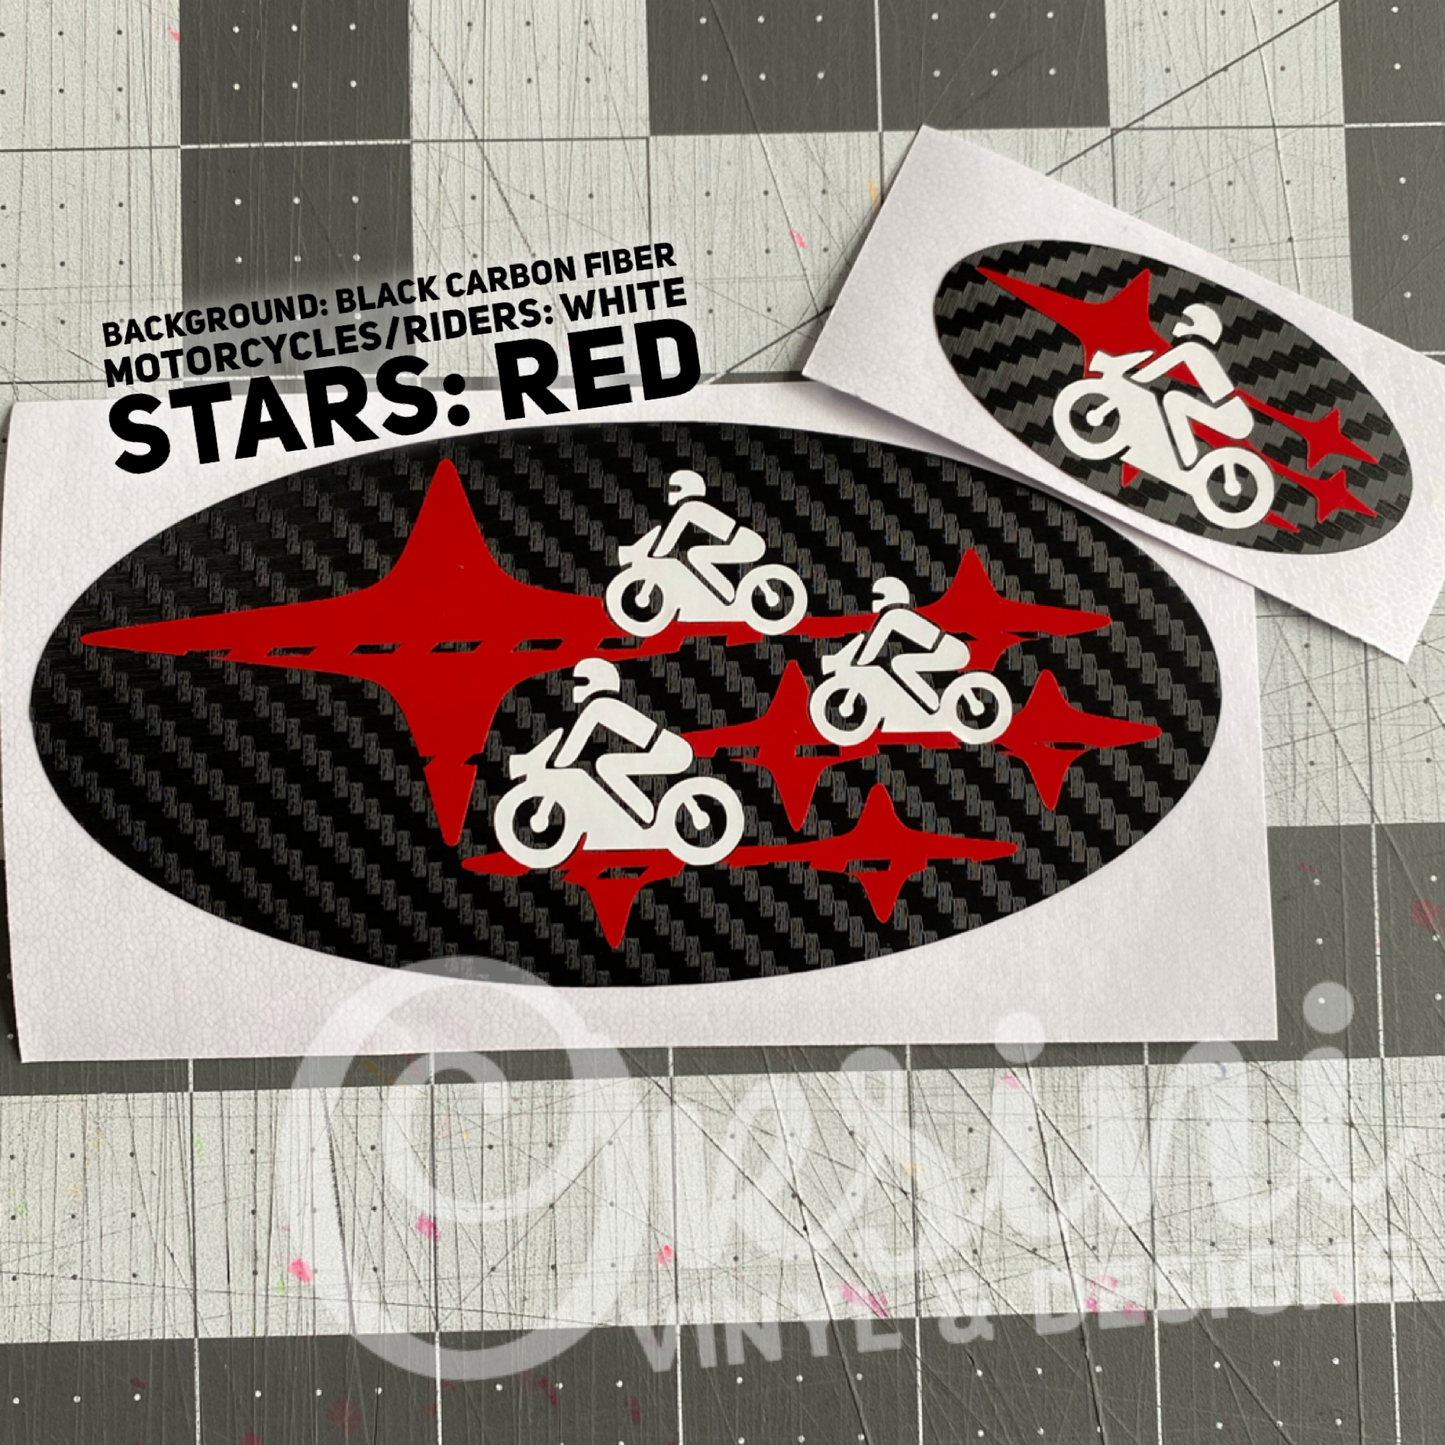 Group of (Street) Motorcycle Riders on Subaru Stars Emblem Overlay Decal Set